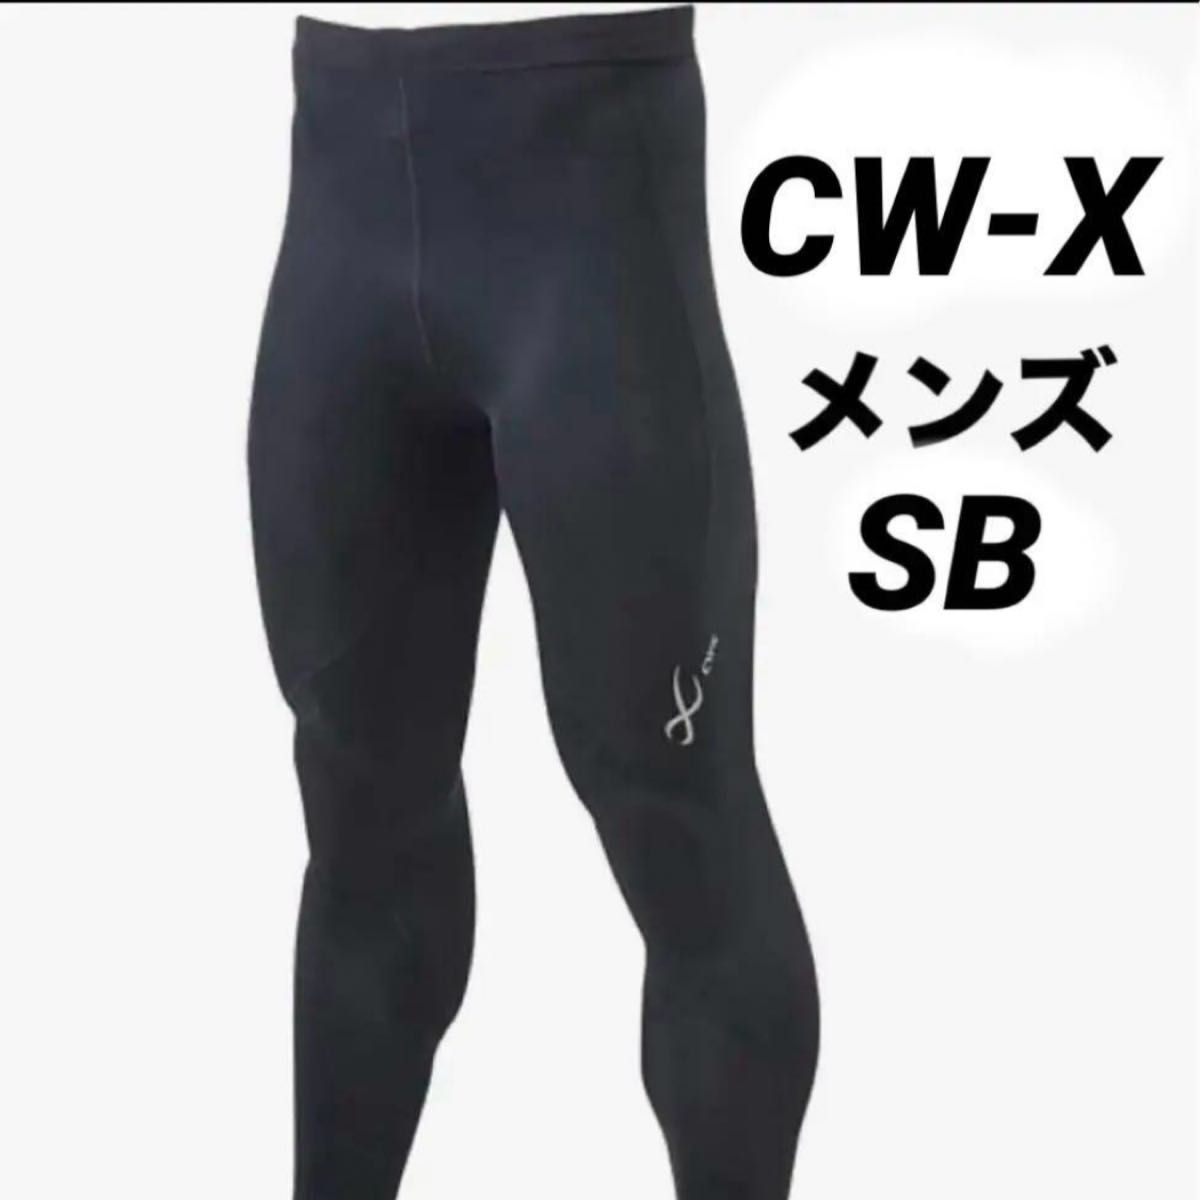 CW-X メンズスポーツタイツ ひざサポート スポーツタイツ HXO499 SB レギンス